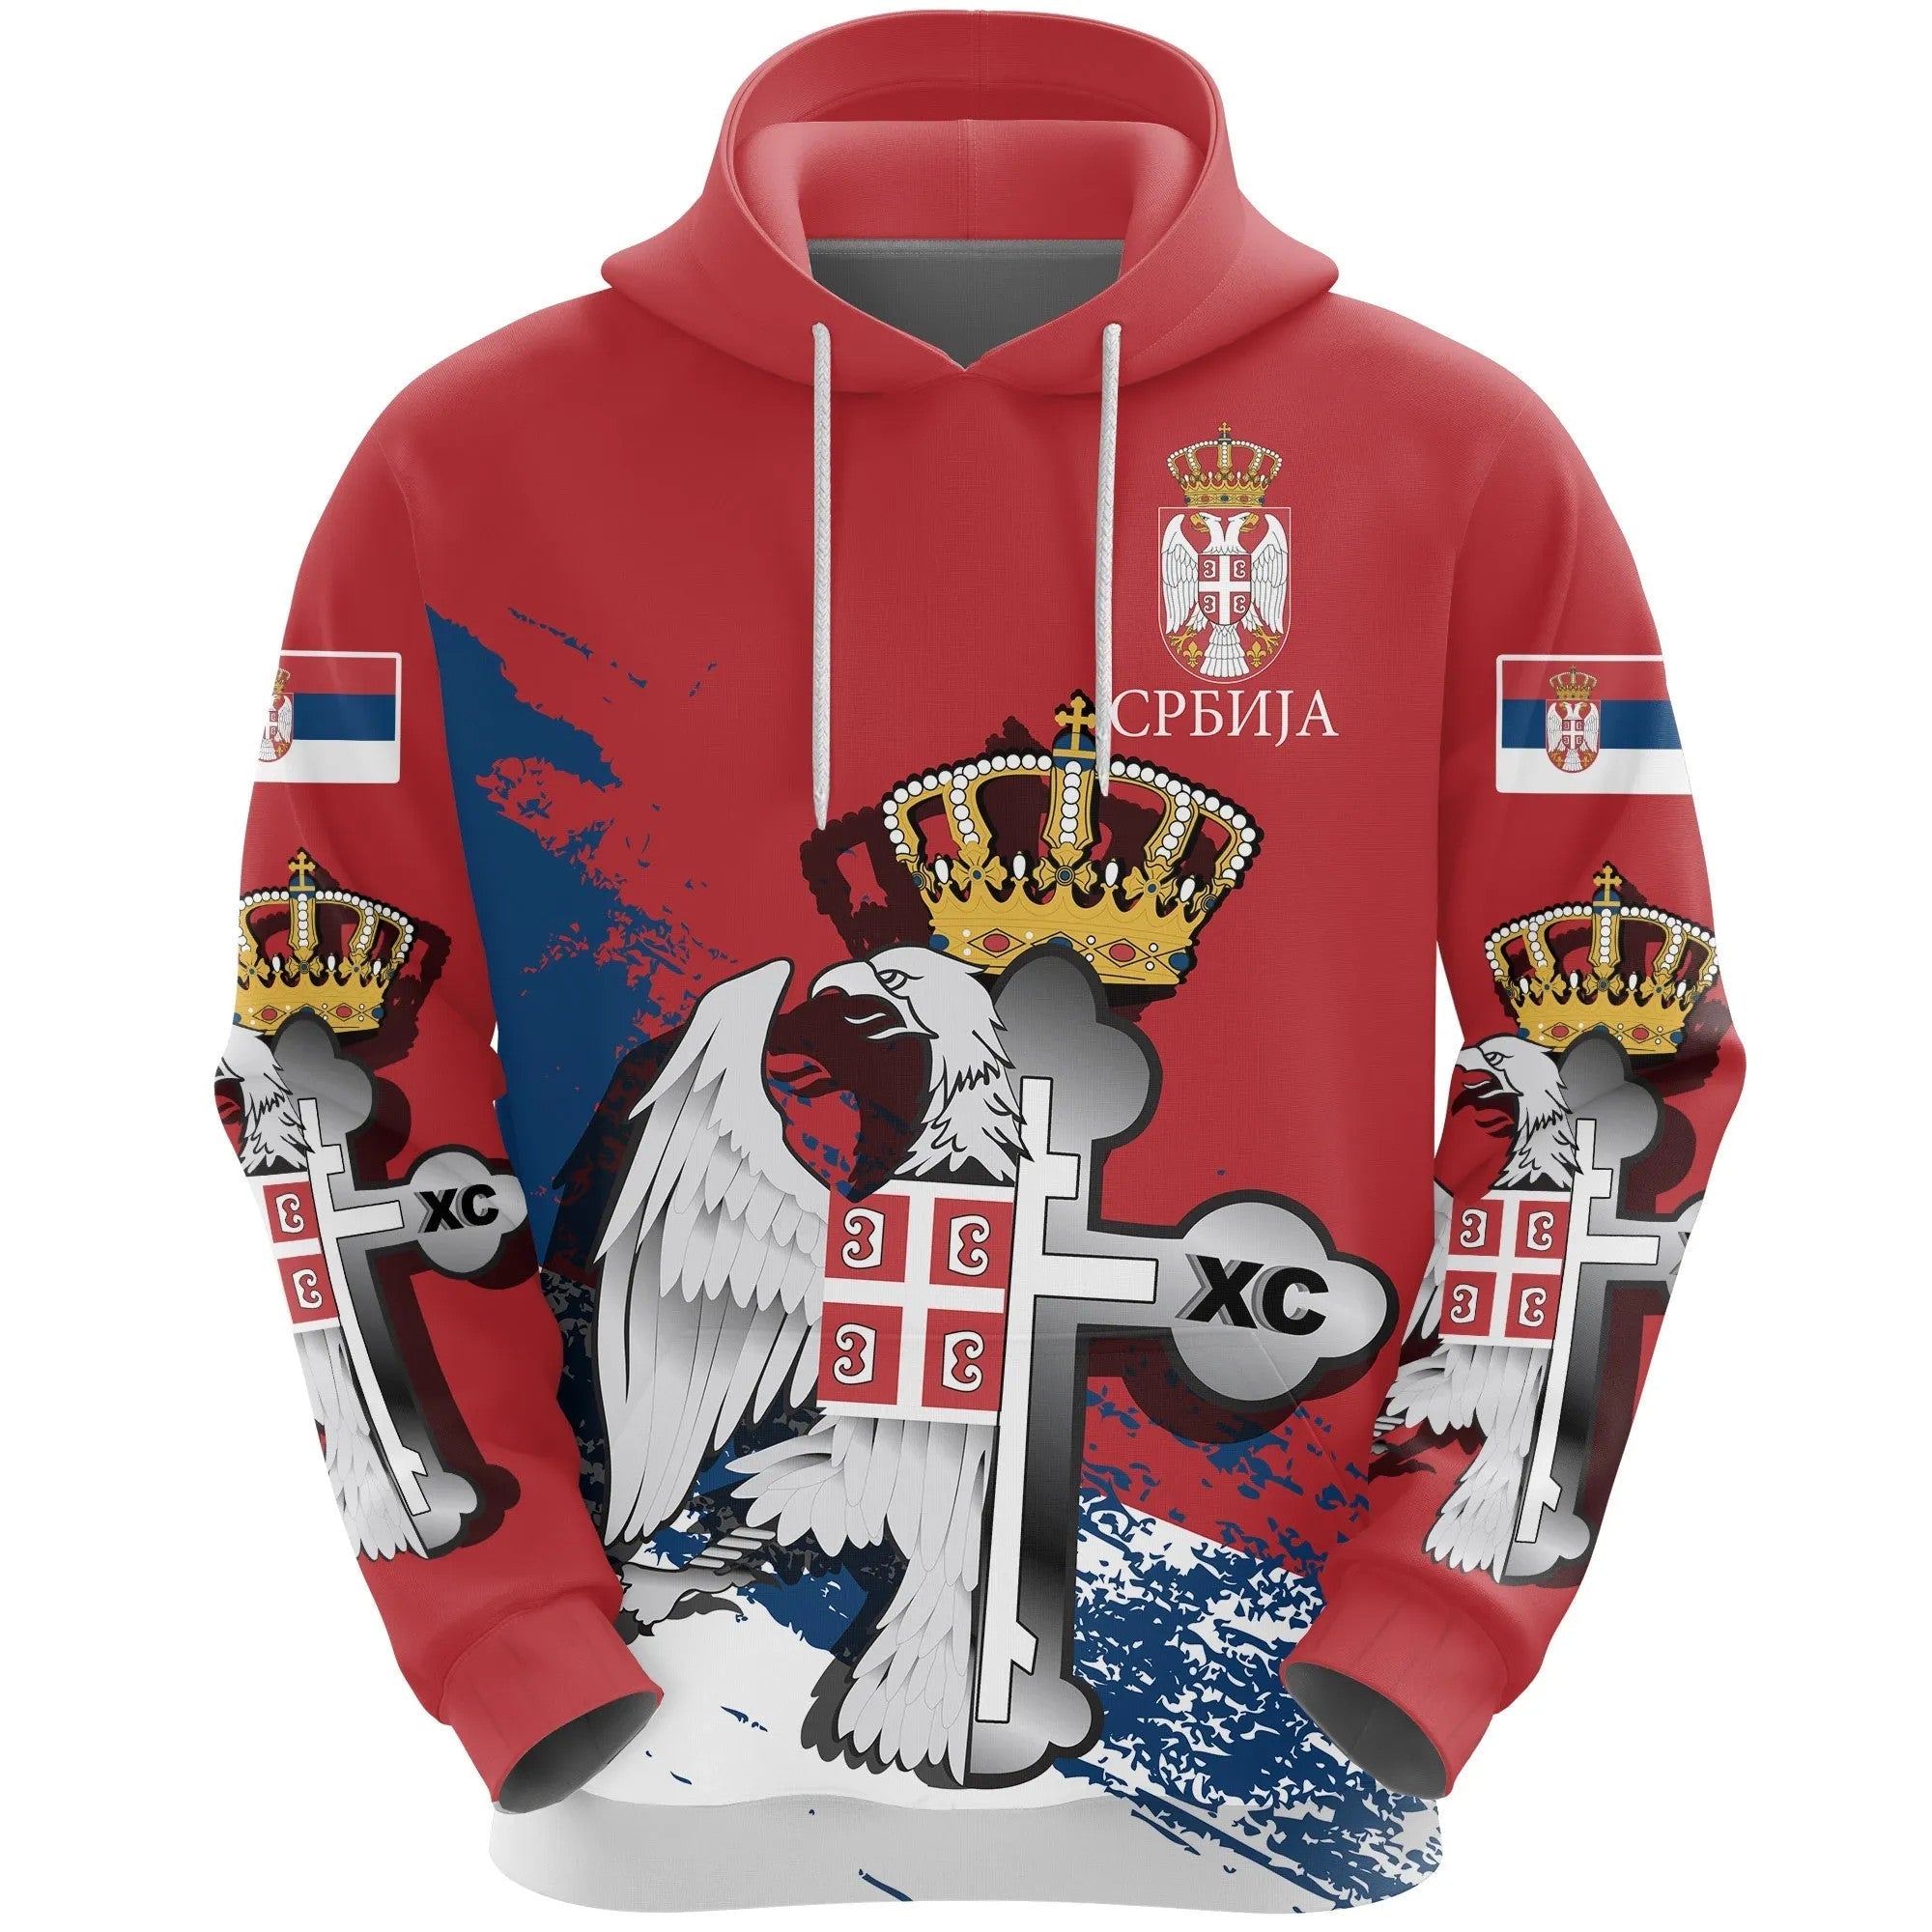 serbia-special-hoodie-serbian-eagle-orthodox-cross